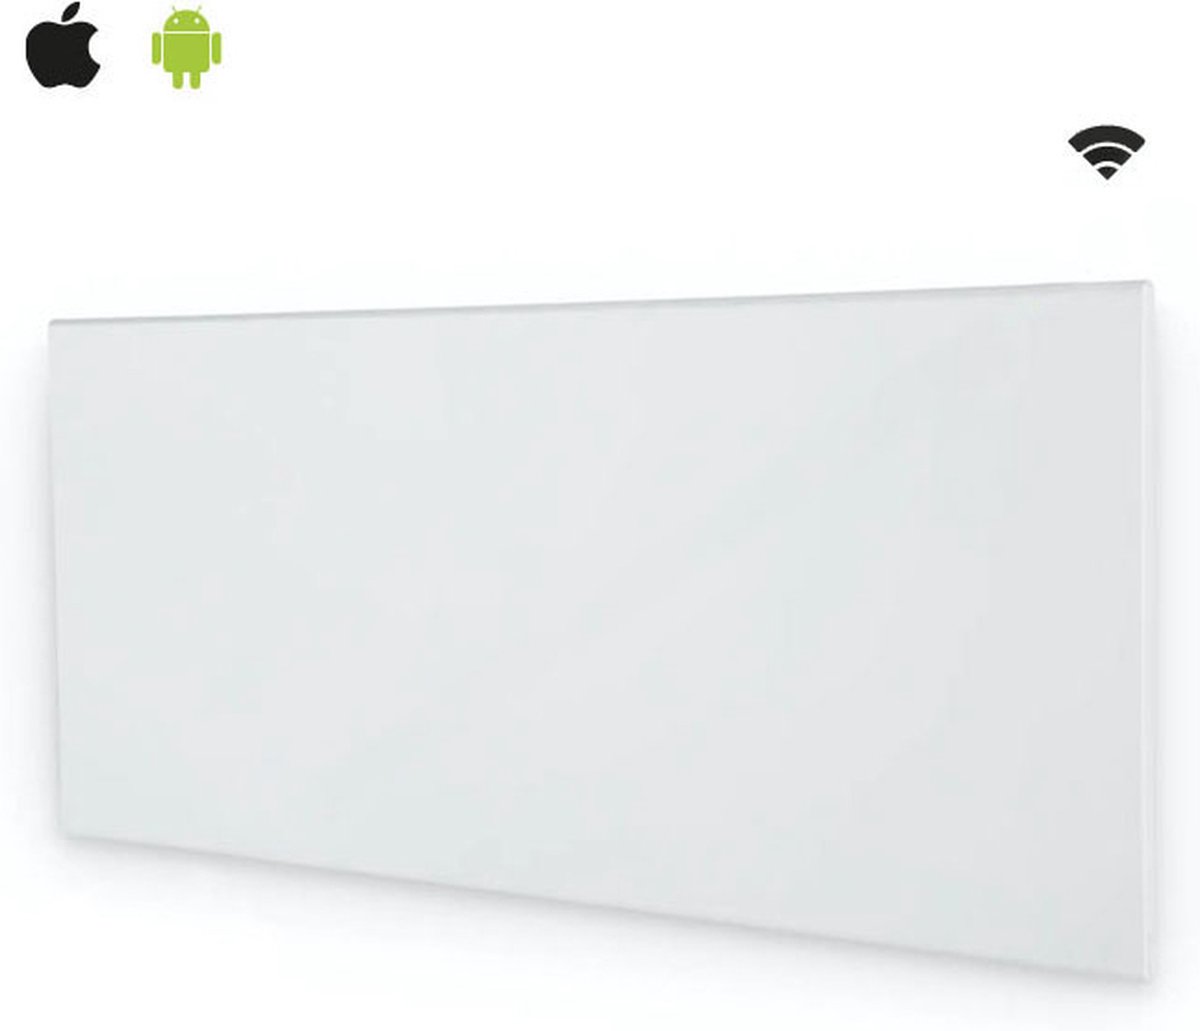 Adax Neo wifi Compact 42cm hoog wit - 1000 Watt